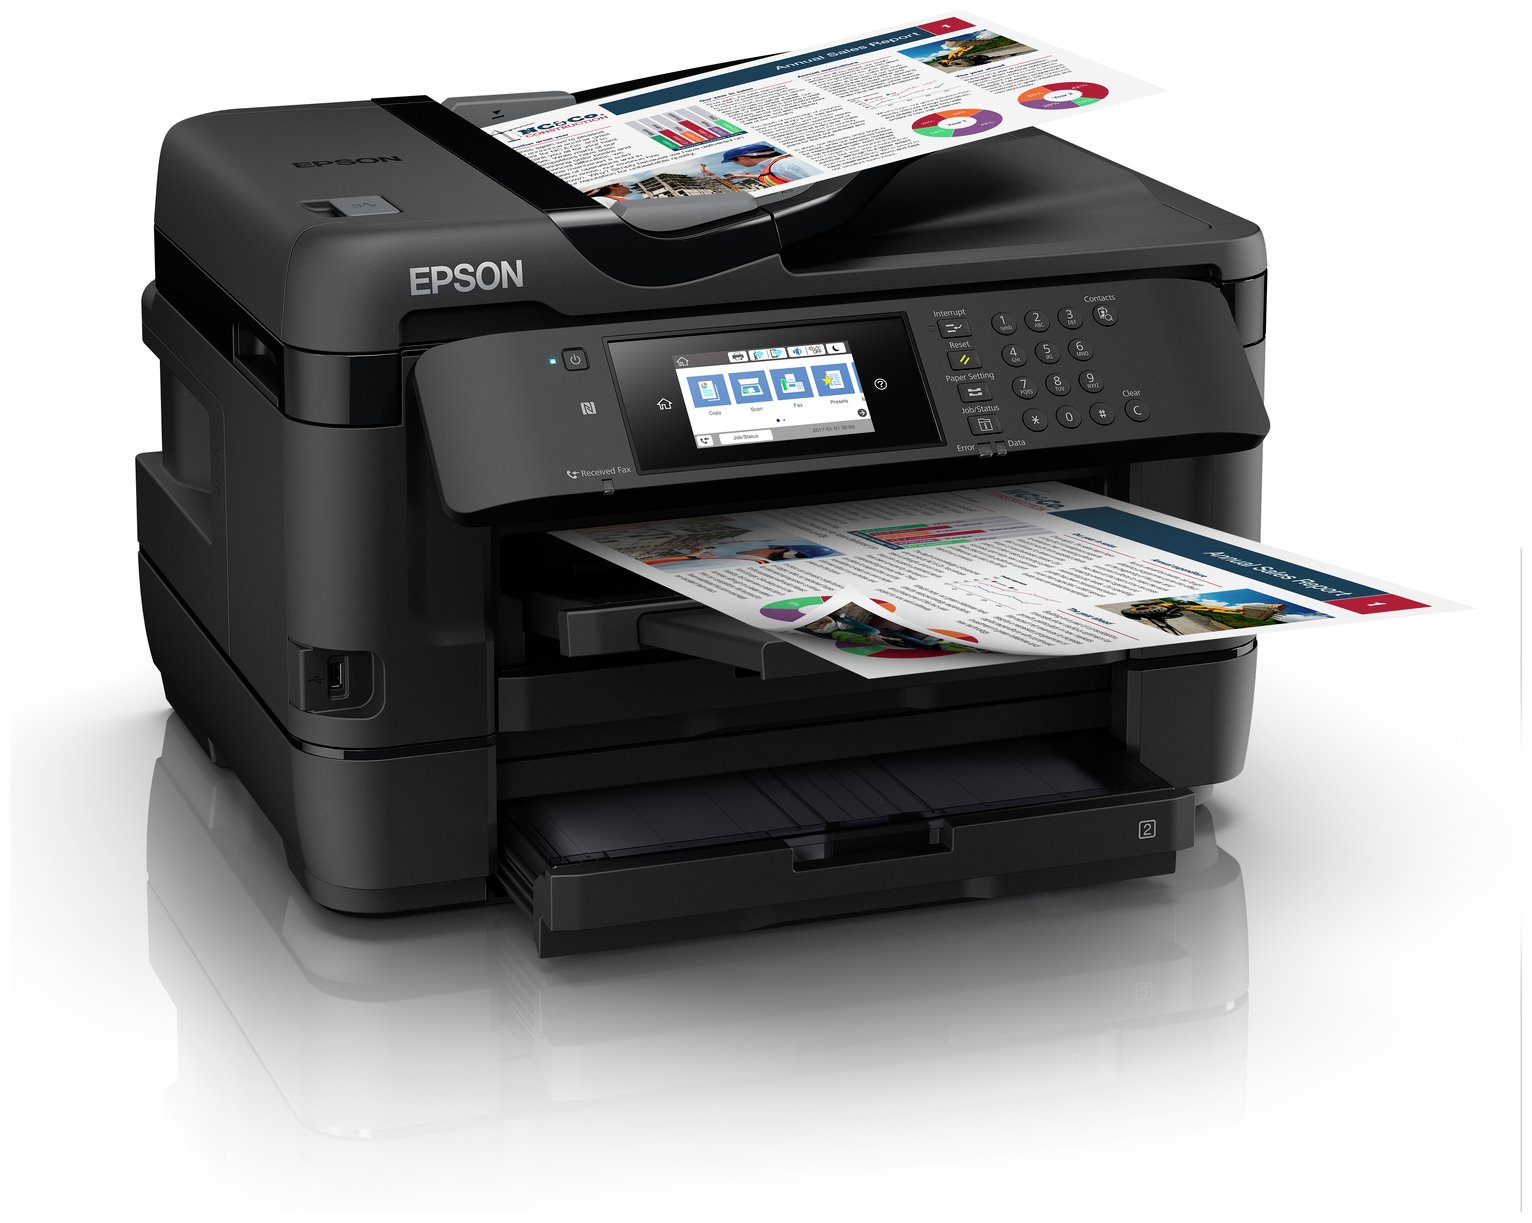 Epson Workforce Wf 7720 All In One Wireless Printer Reviews 8925